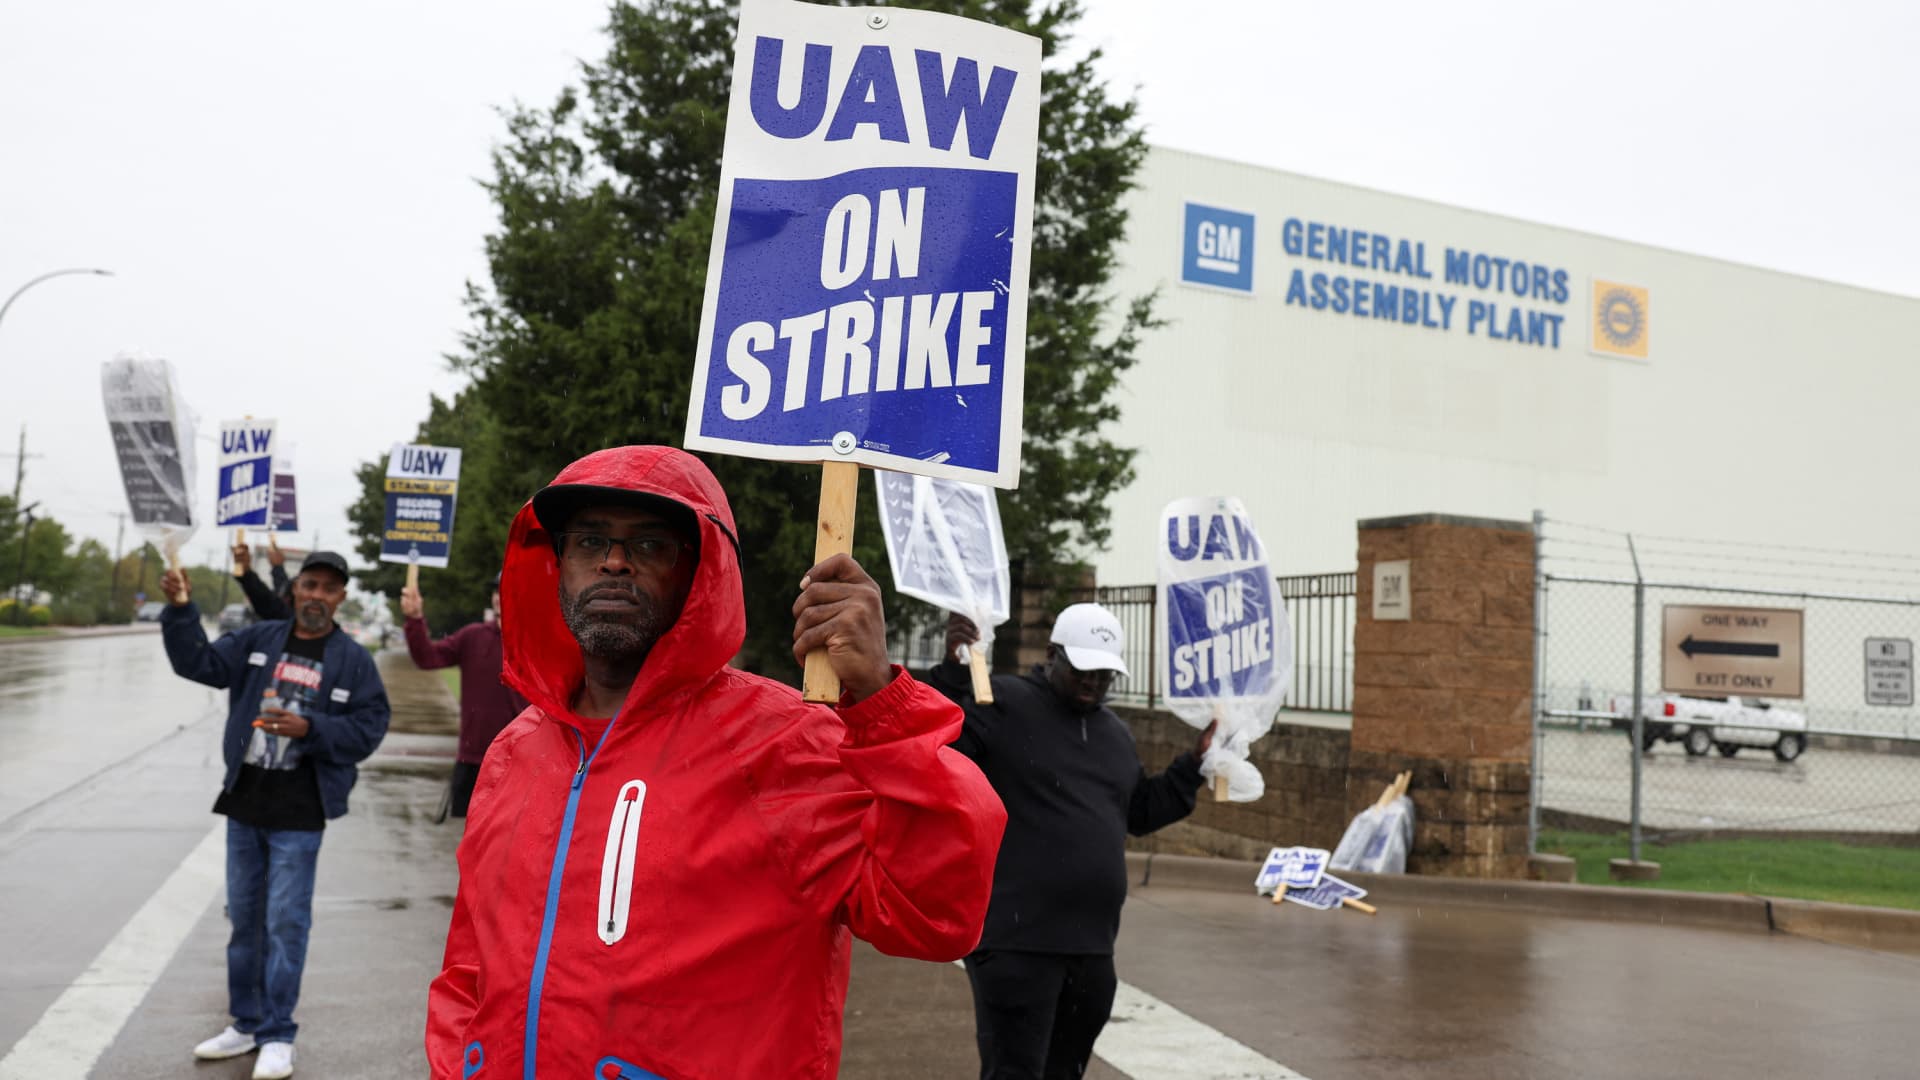 GM, UAW reach tentative agreement to end labor strike